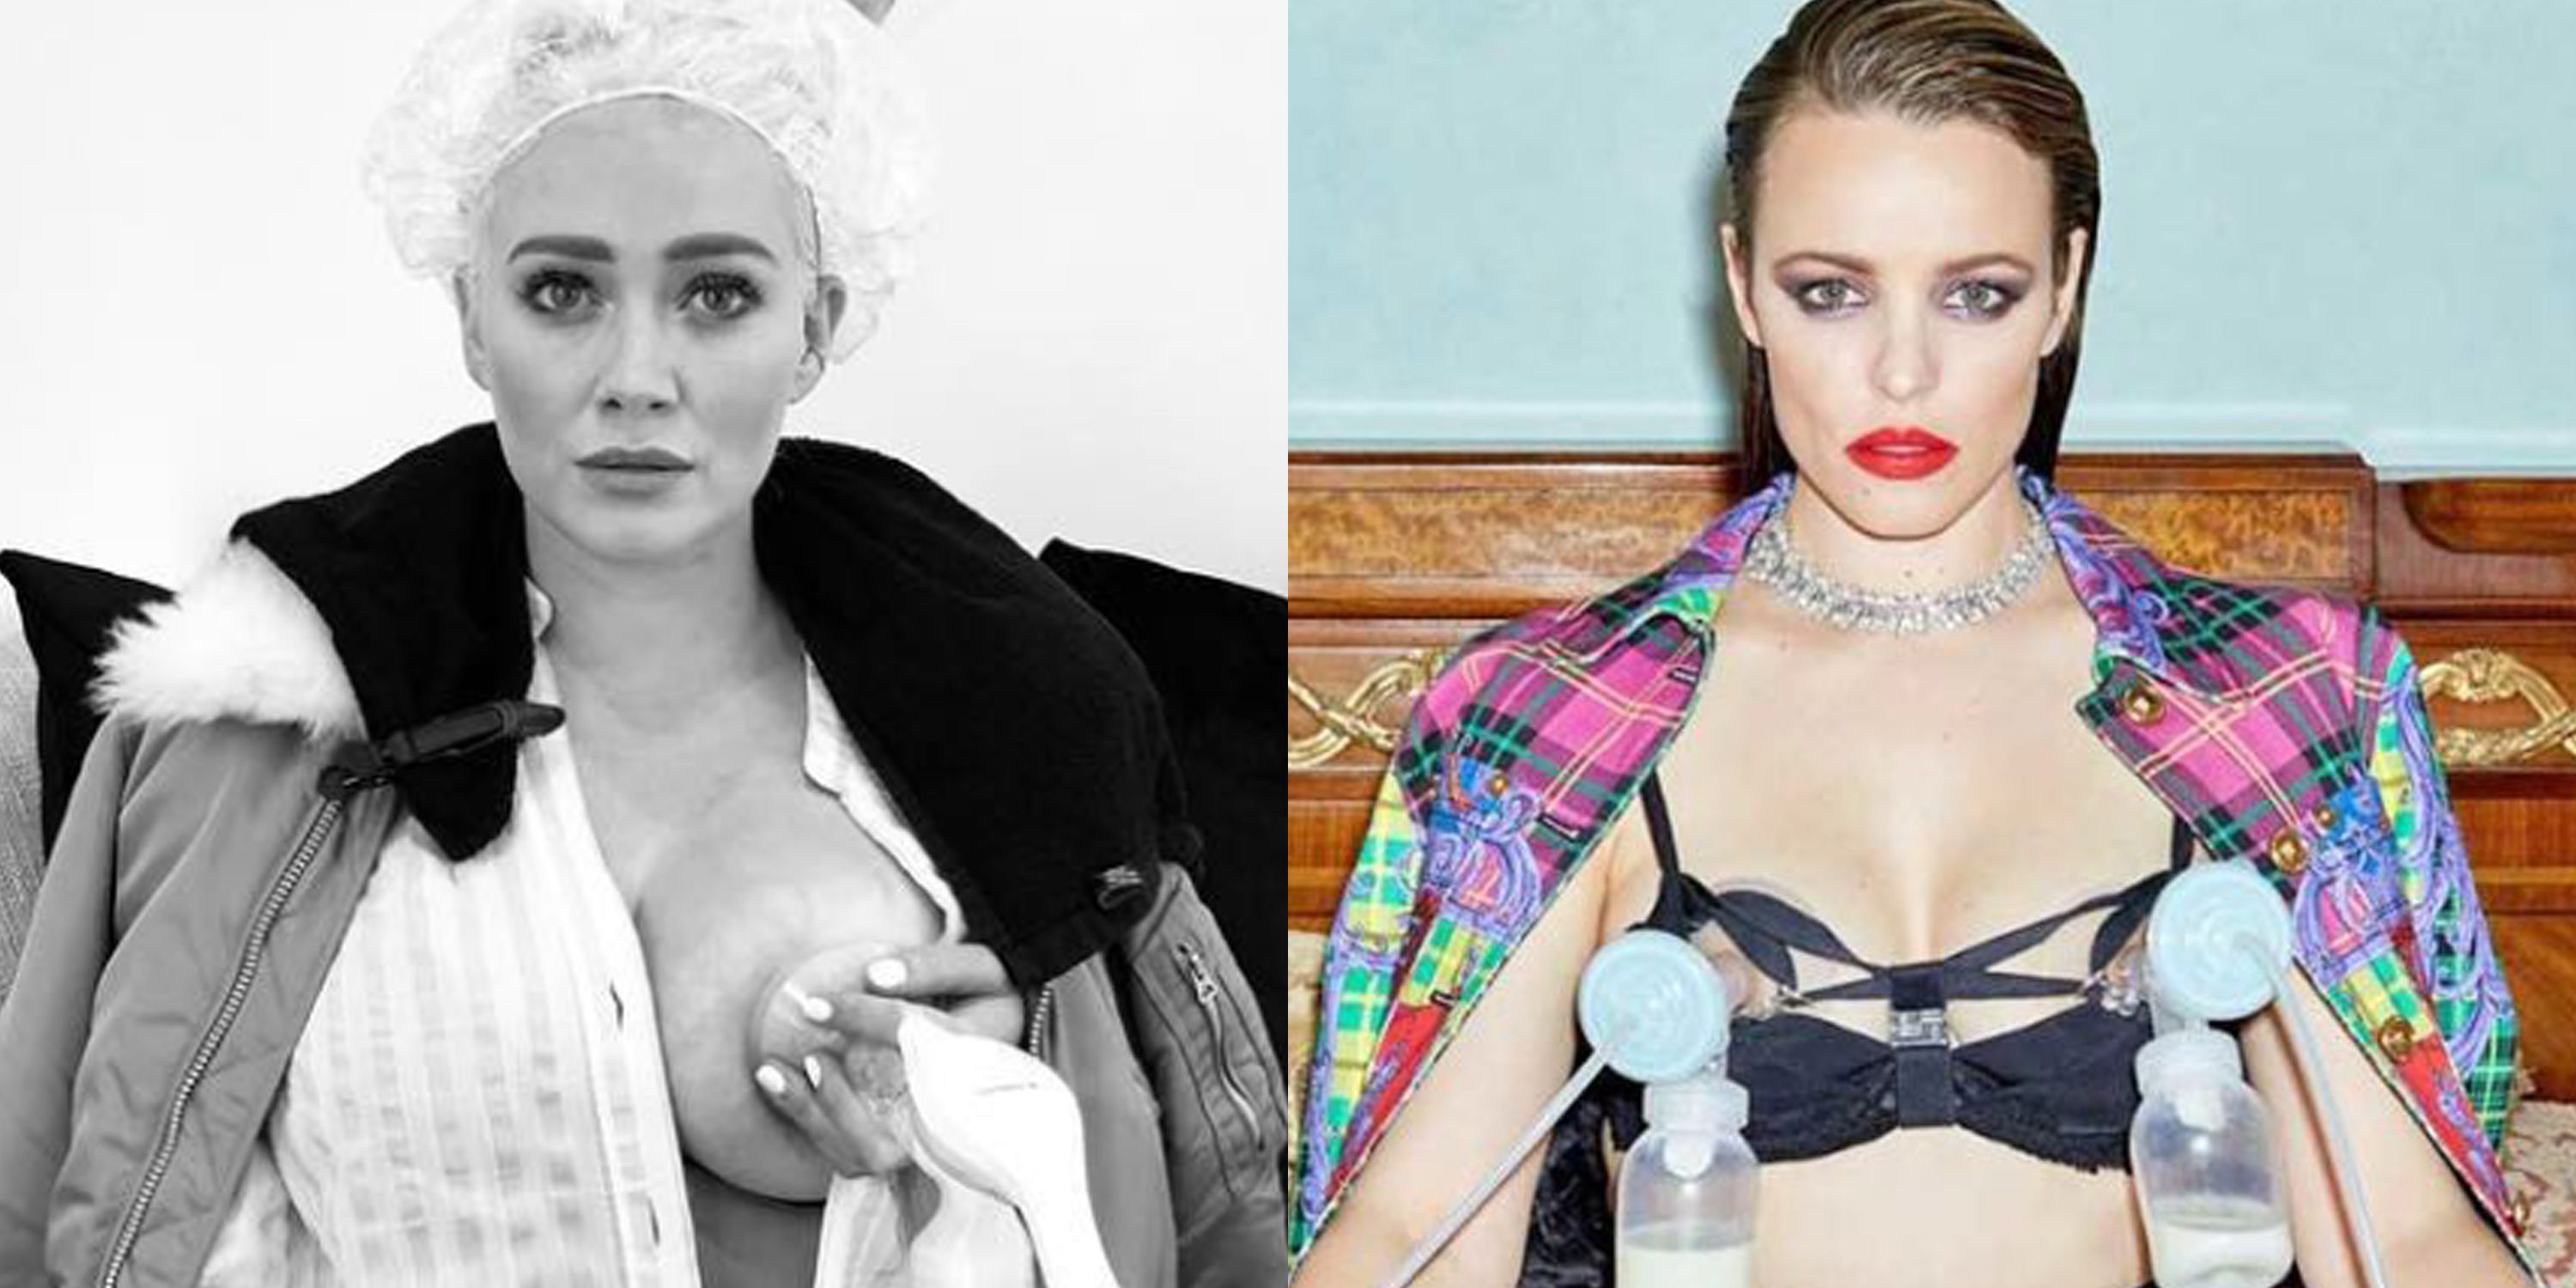 Hilary Duff Huge Lactating Breasts - Hilary Duff Recreates Rachel McAdams' Breast Pump Photo for ...